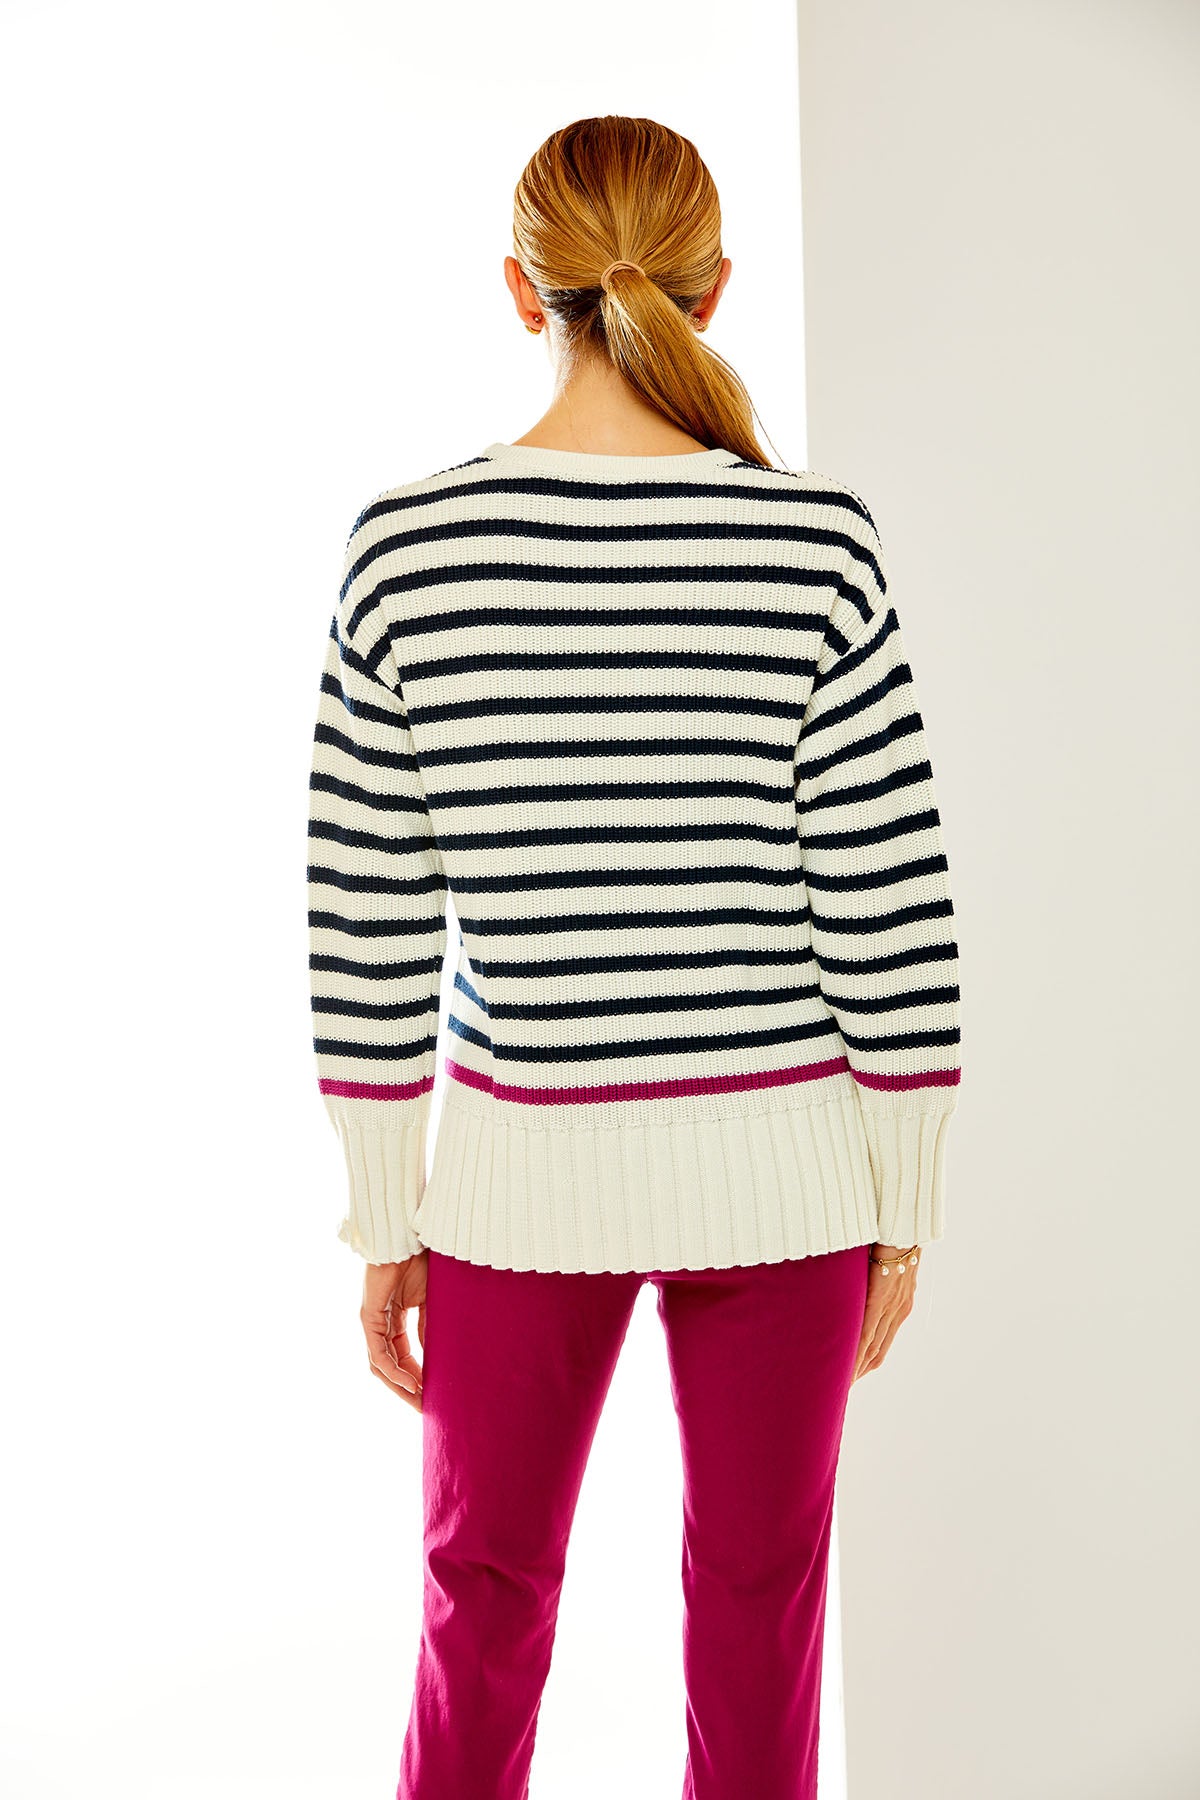 Woman in striped sweater